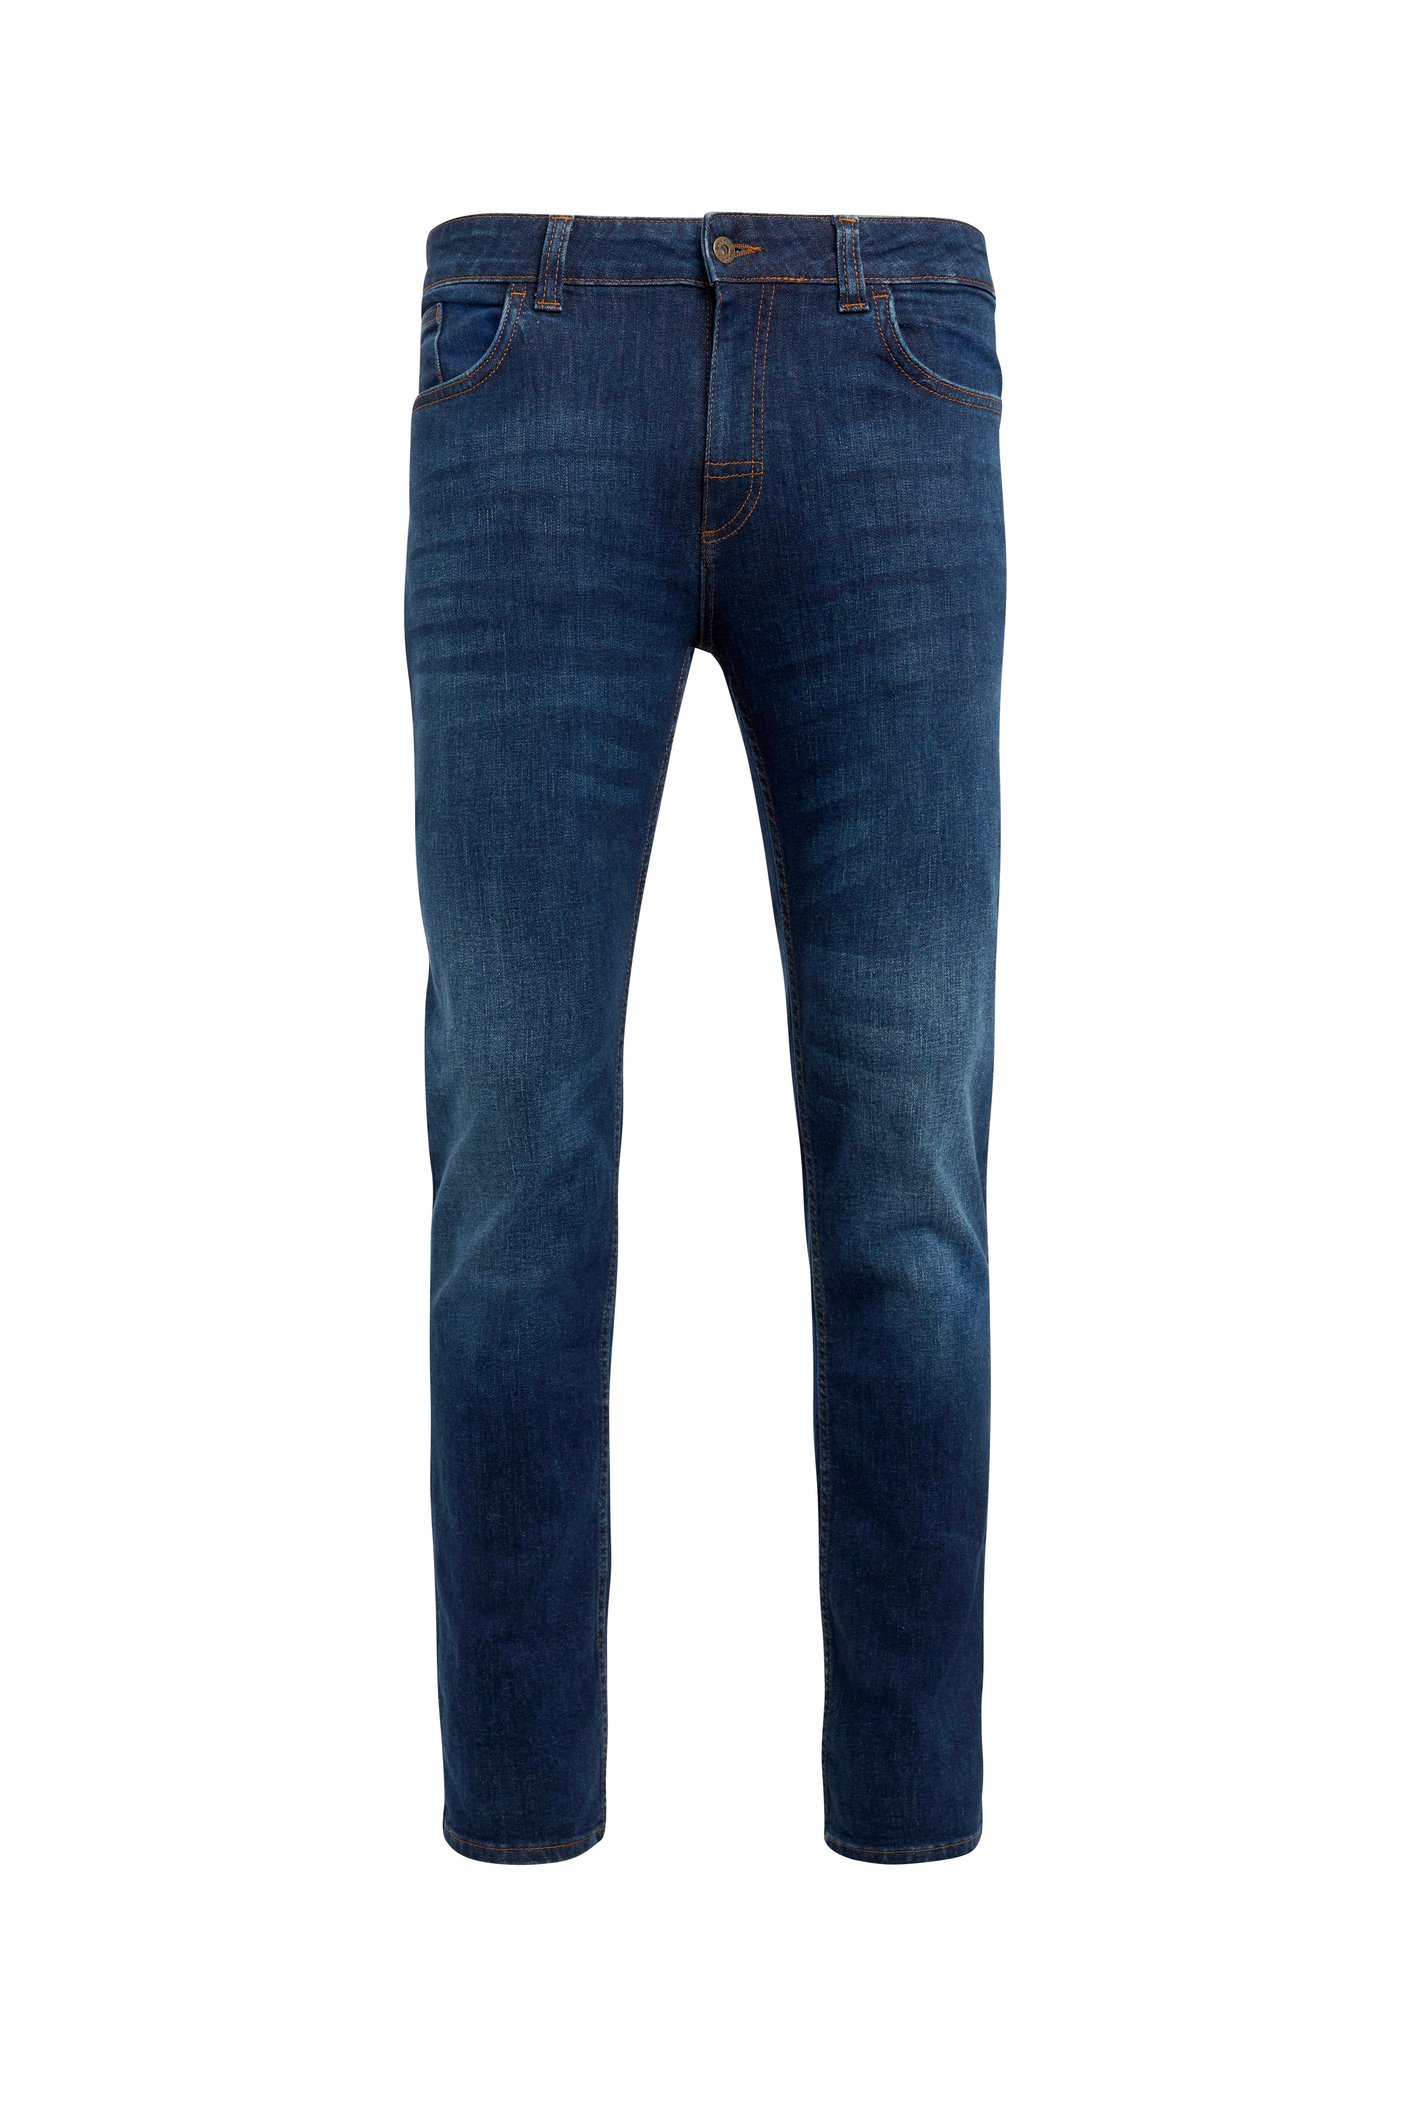 Weird Fish Robson Organic Classic Stretch Denim Jeans Indigo Size 36 Long